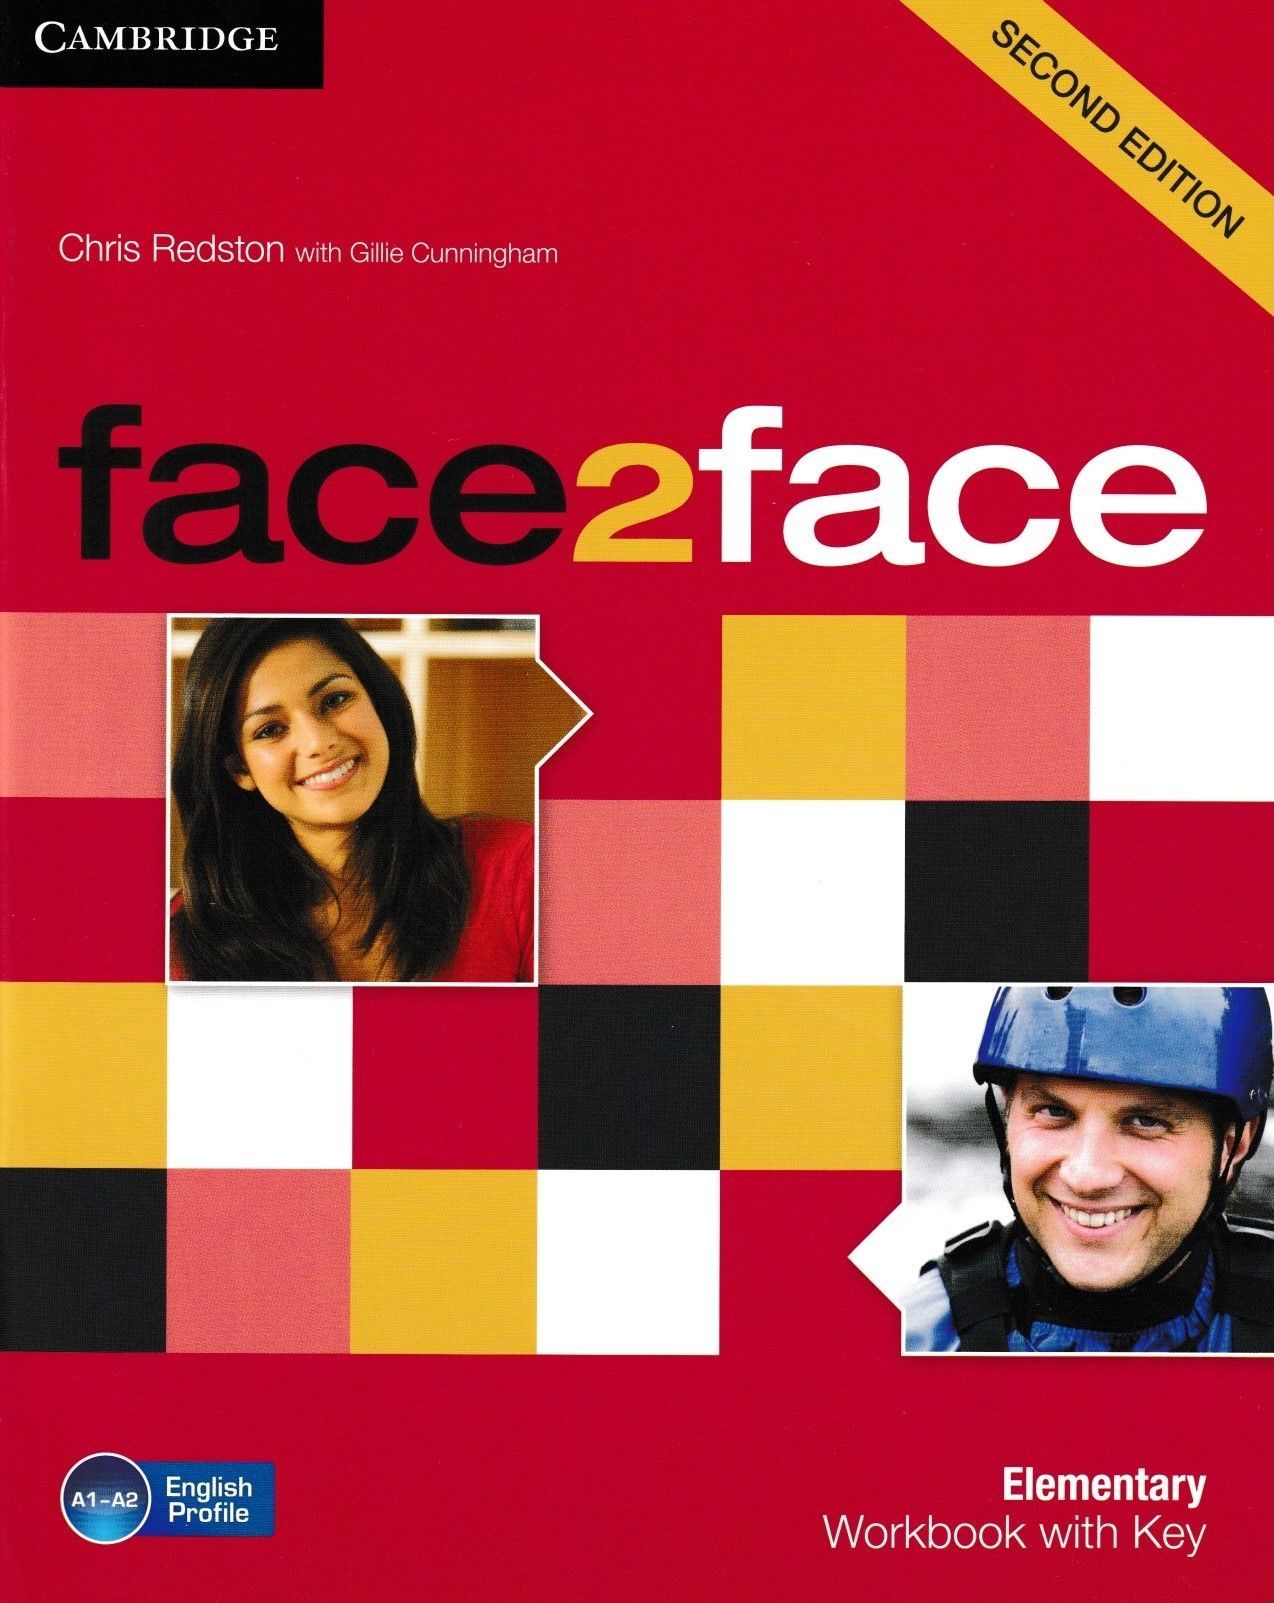 Elementary workbook 2nd edition. Face2face, Cambridge Elementary внутри. Cambridge Chris Redston face2face Elementary students book answers. English face2face Elementary.